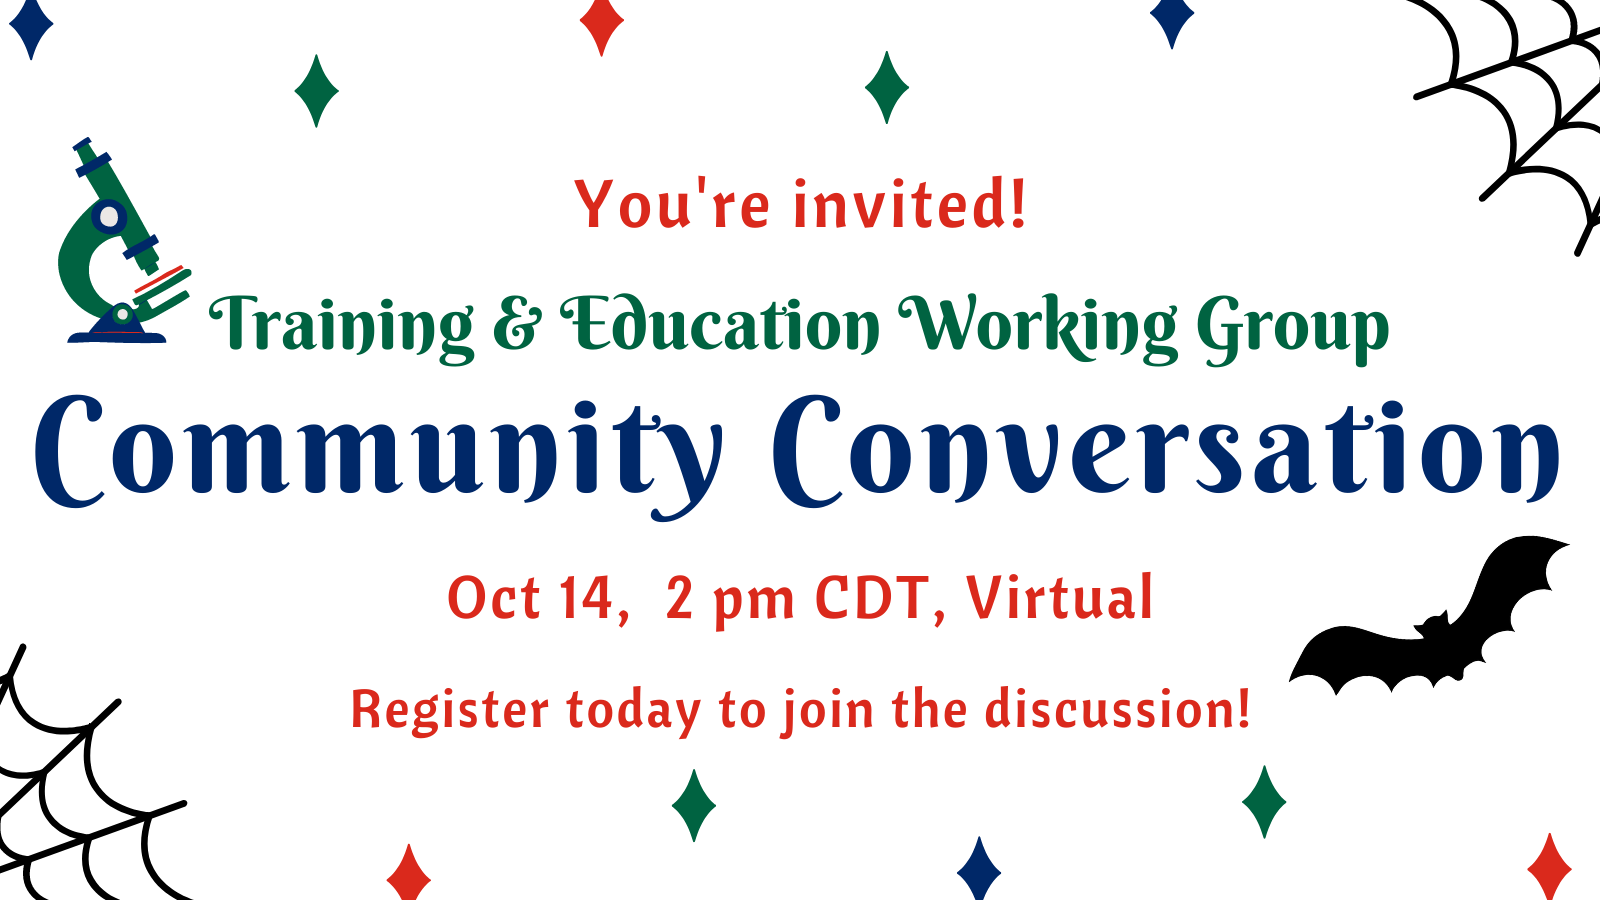 Training & Education Working Group Community Conversation Oct 14, 2021